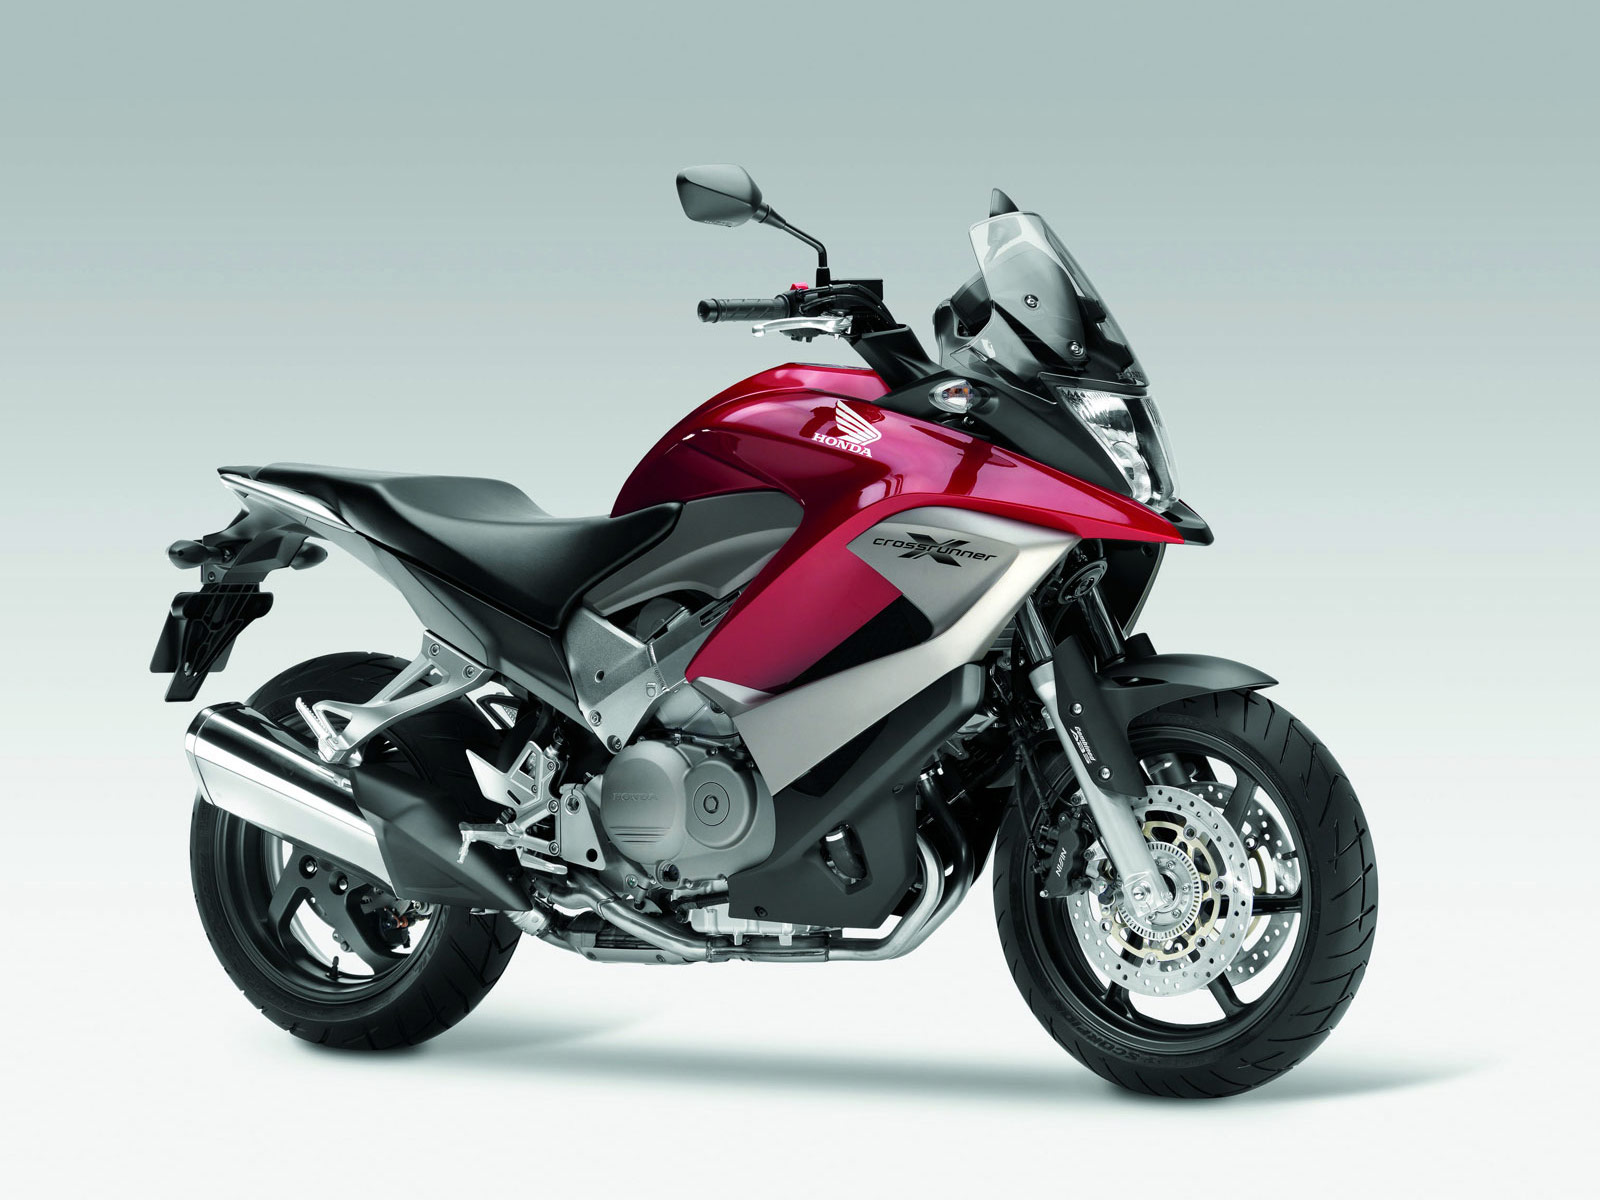 Honda Motorcycles New Models 2015 Hd Wallpaper Motorcycles Wallpaper